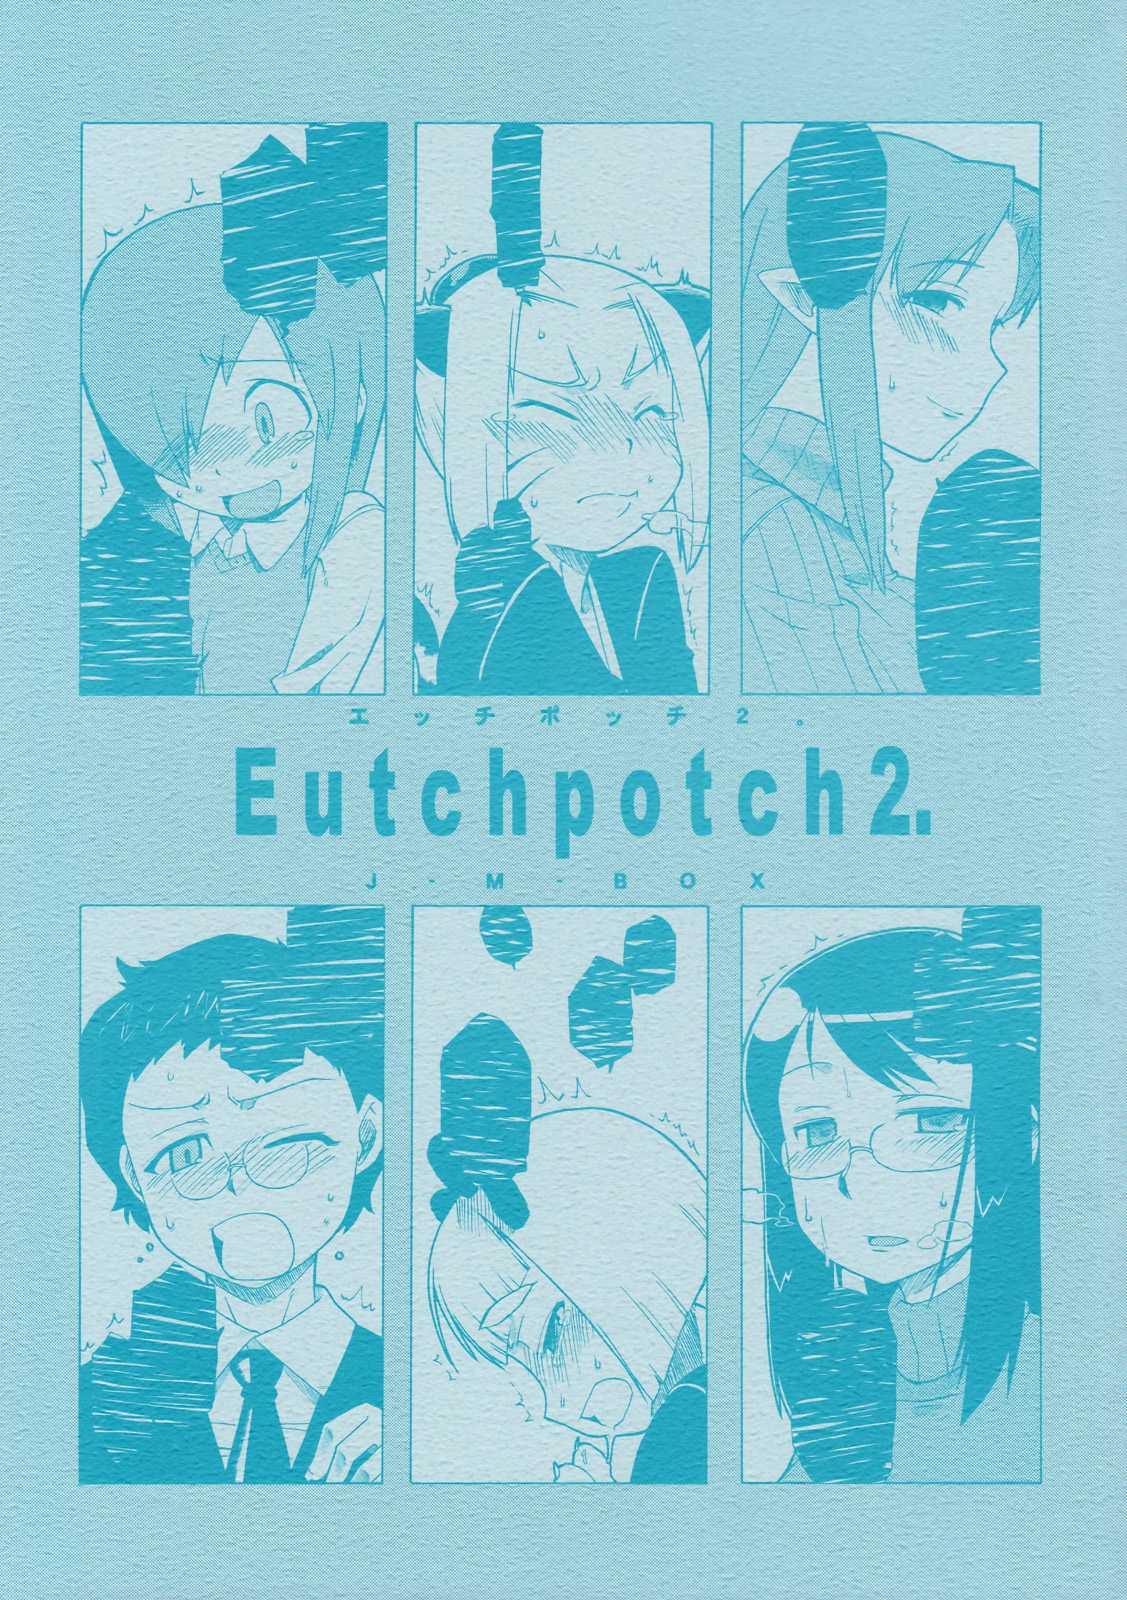 [J-M-BOX] Eutchpotch2 (various) 